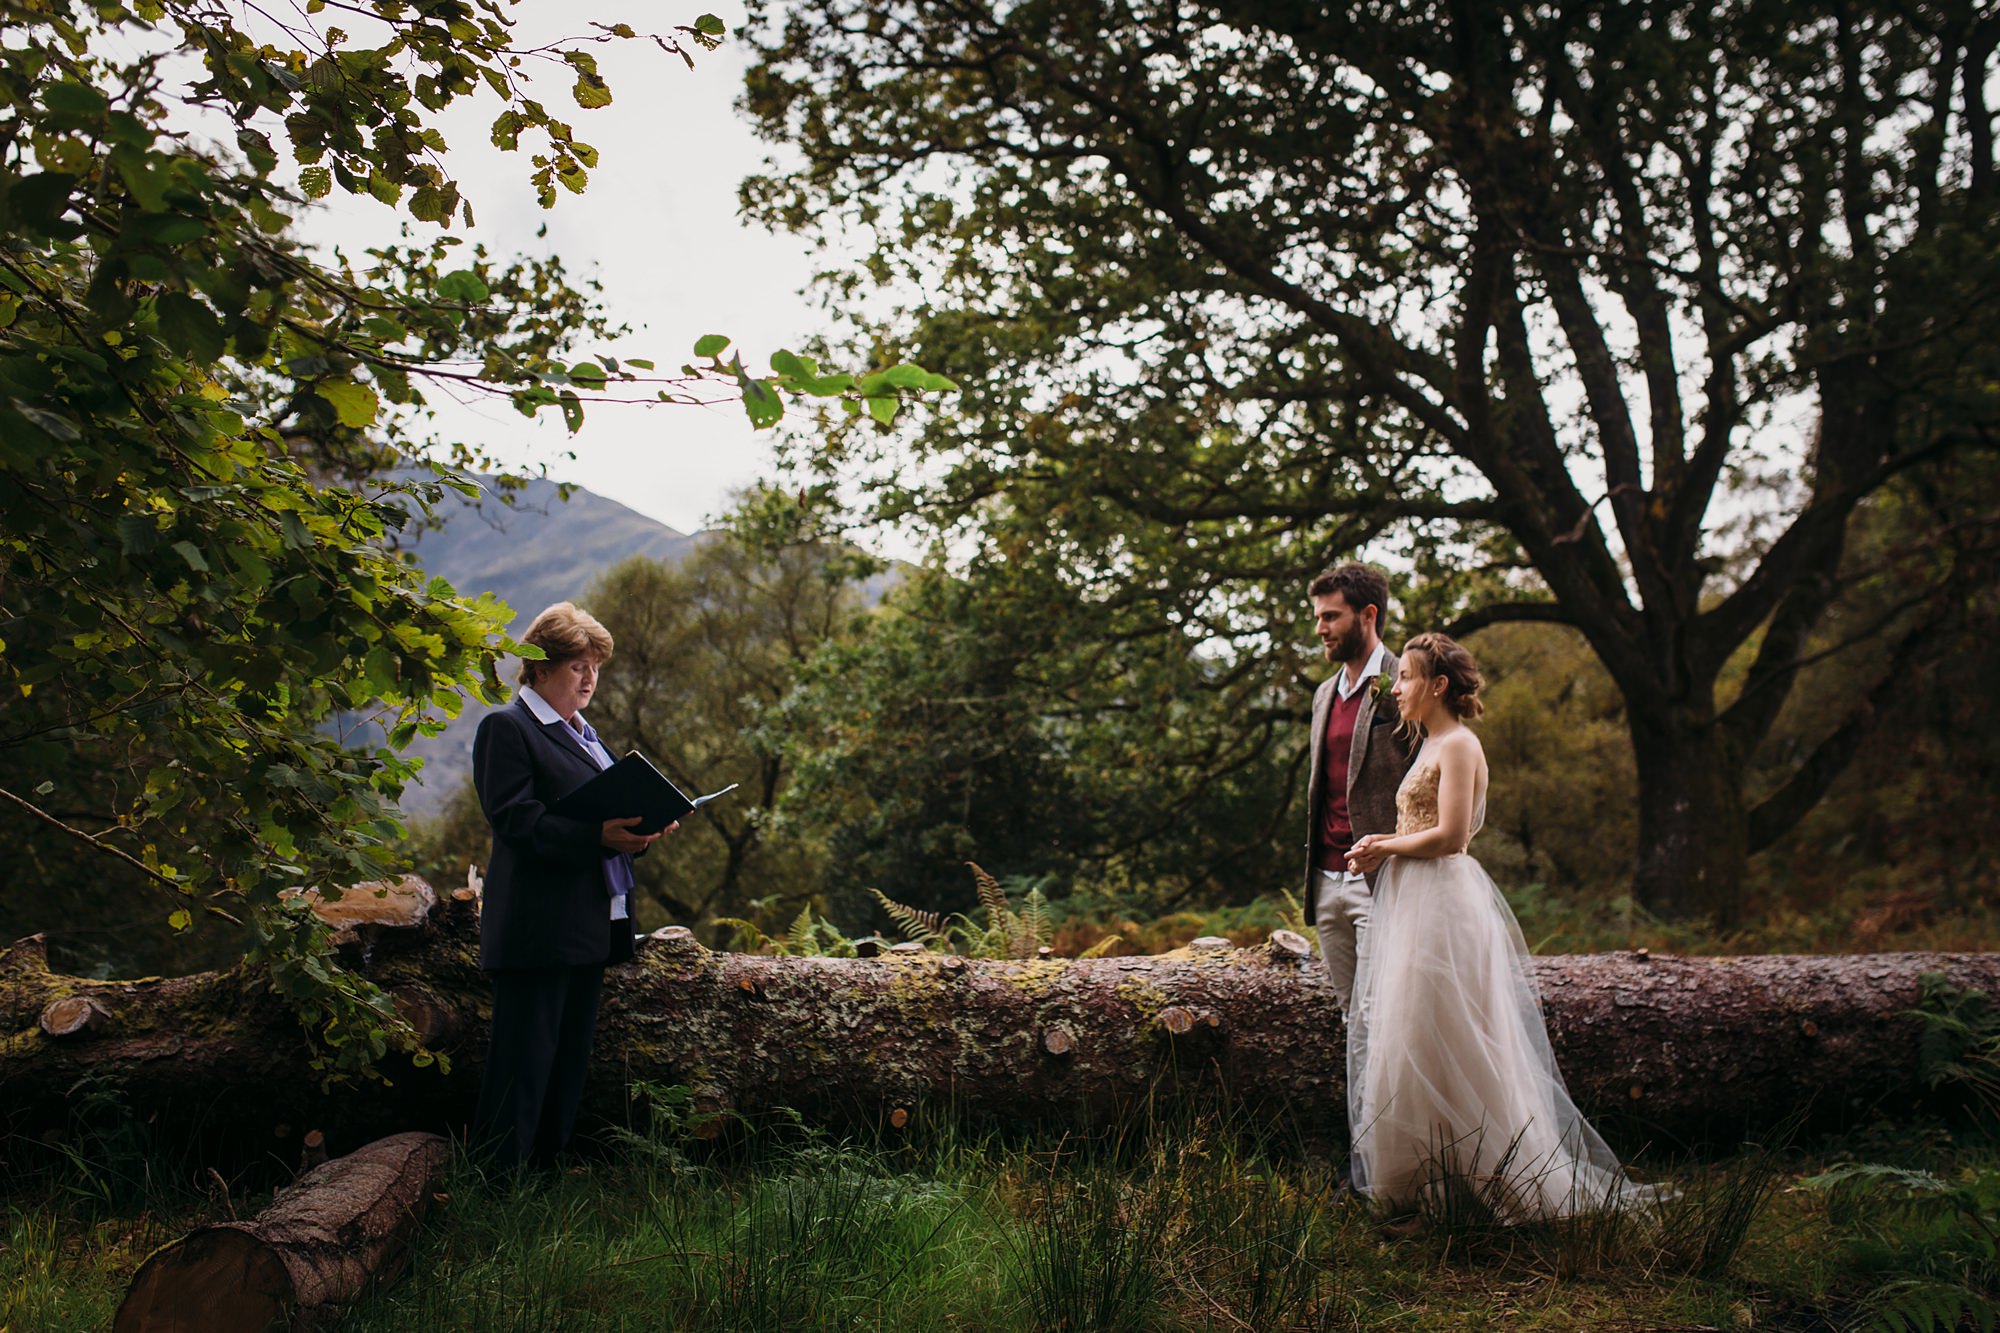 Eloping to Scotland - a civil wedding ceremony in Glencoe